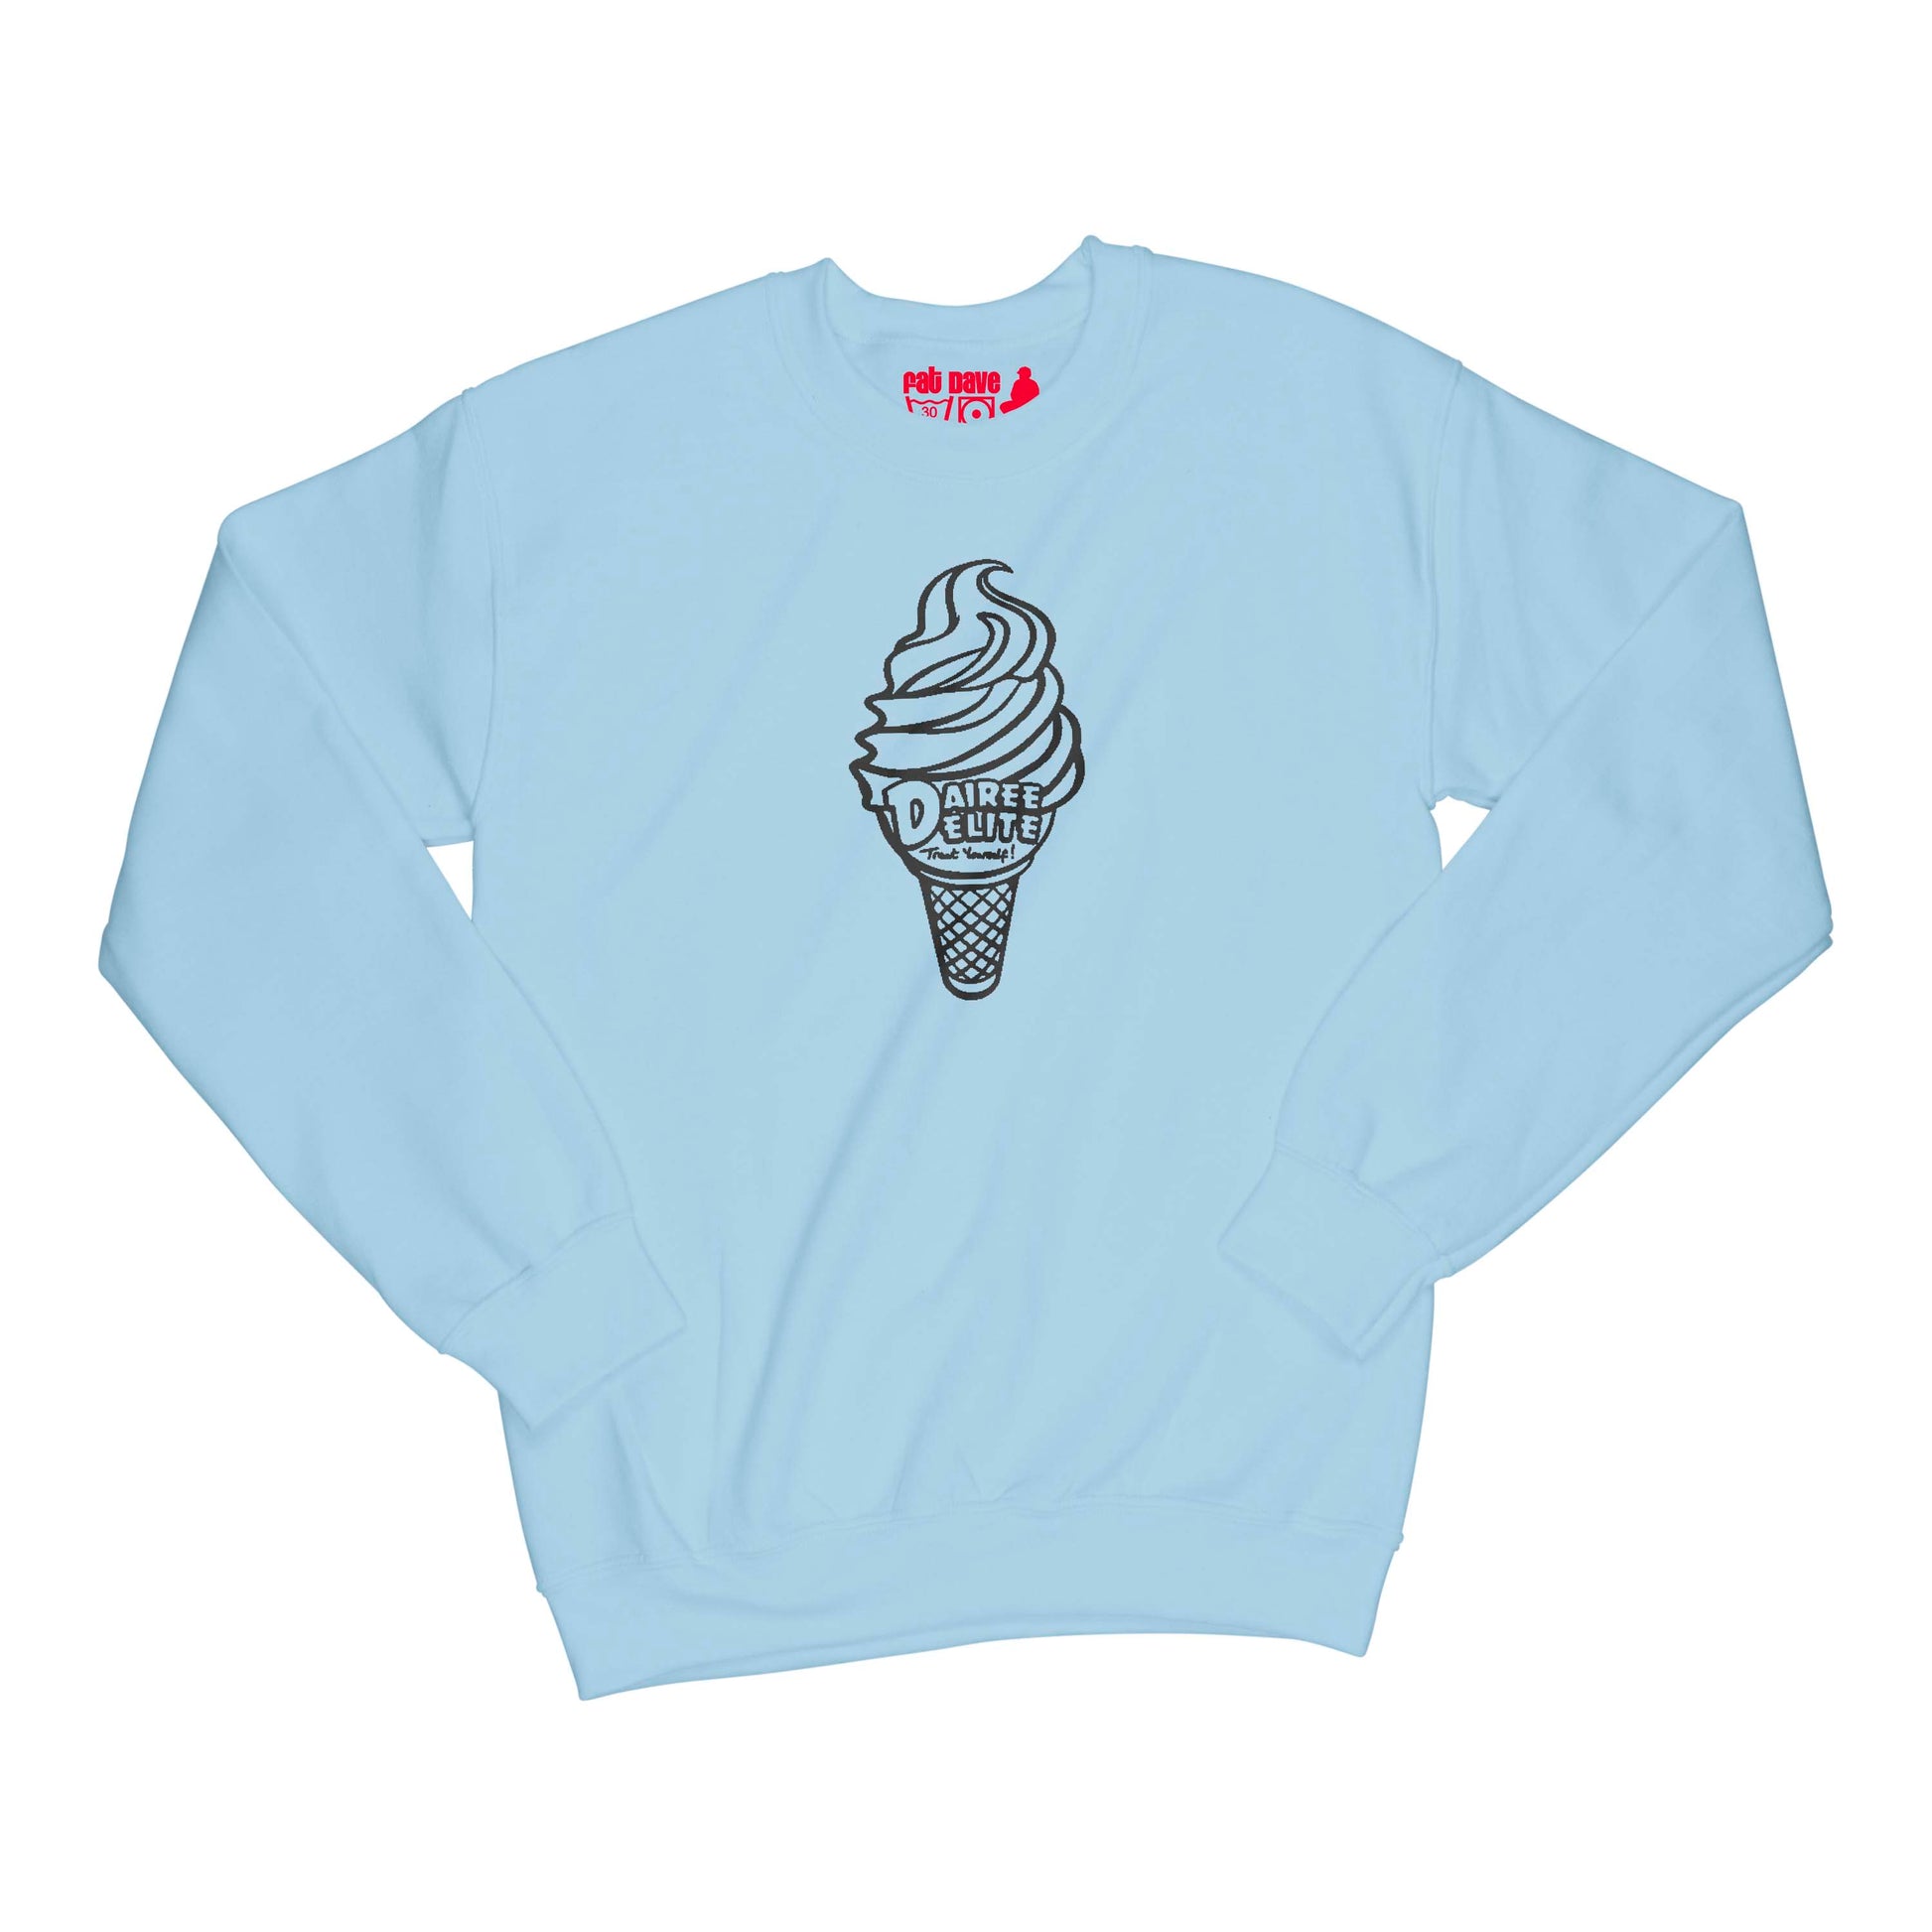 Dairee Delite 70th Anniversary Treat Yourself Cone Sweatshirt Small Light Blue